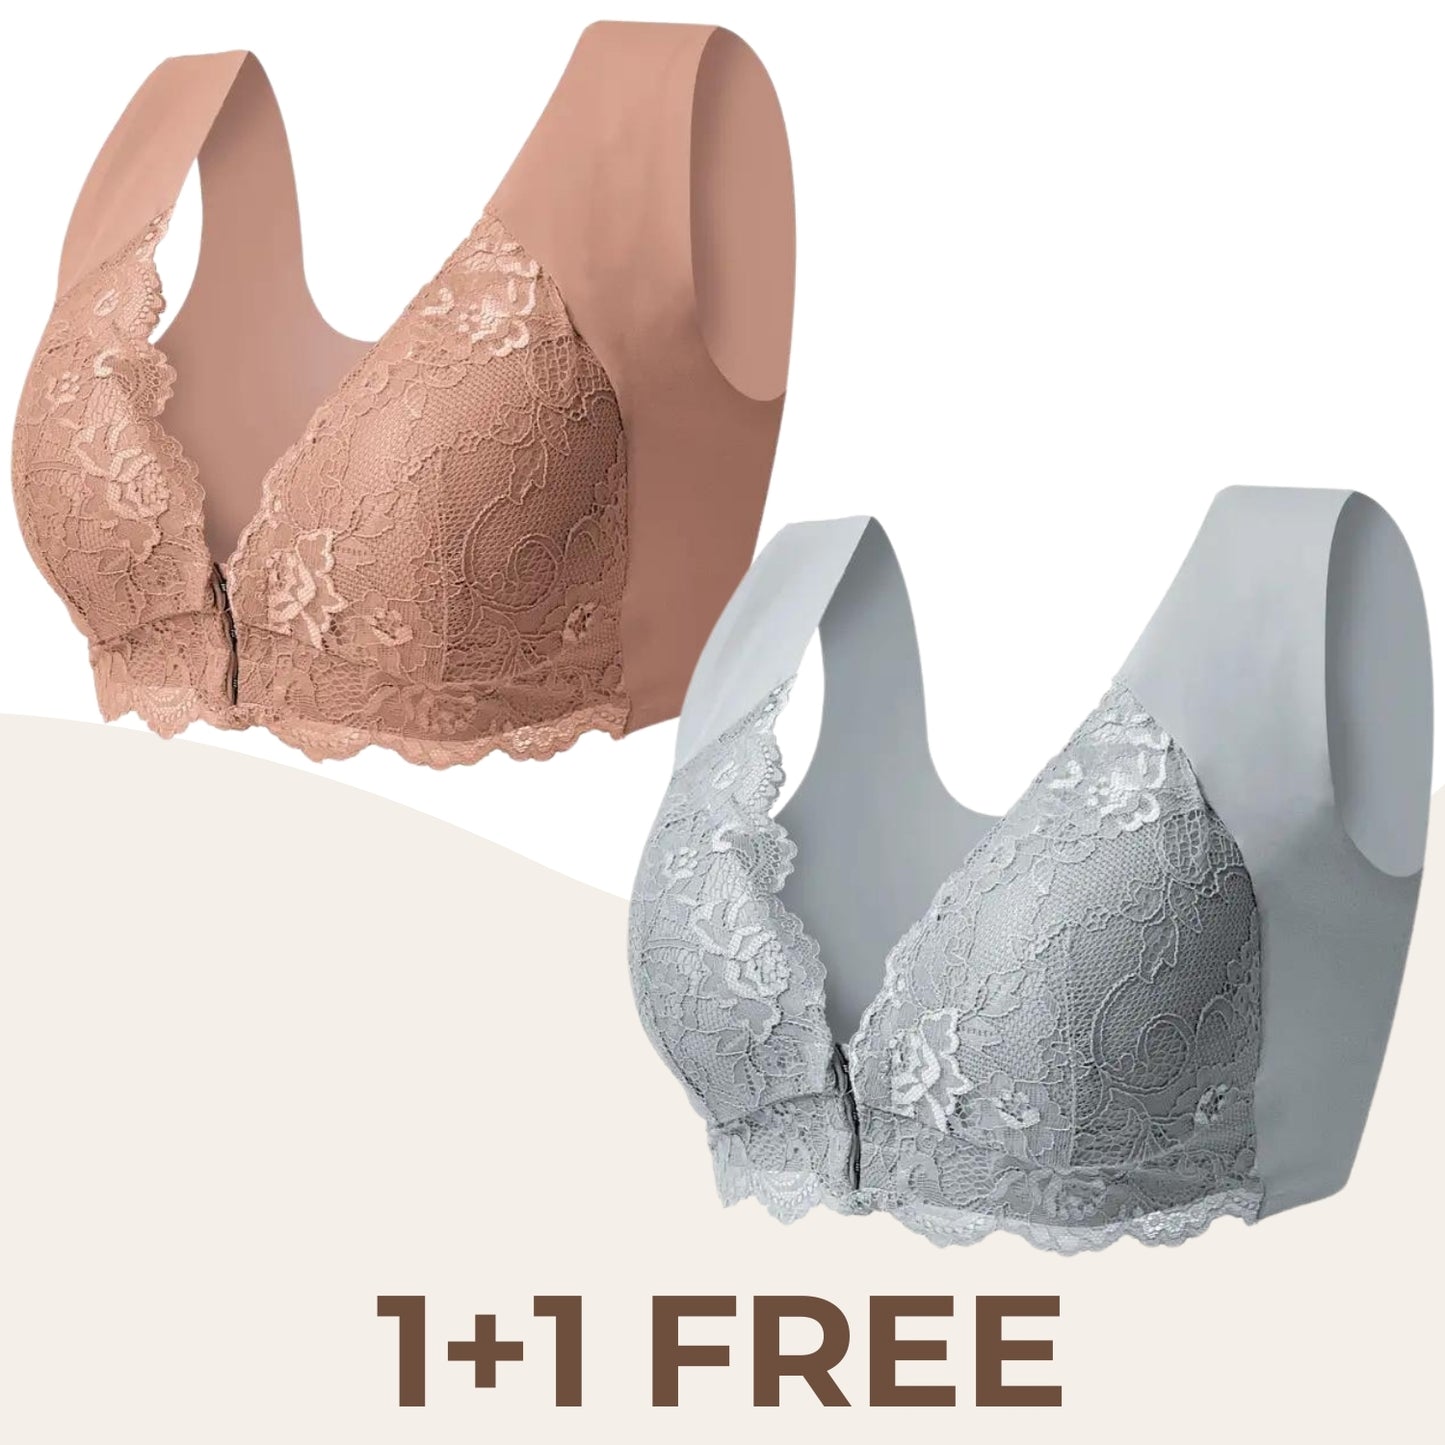 Eleva - (1+1 free) Comfortable support bra with closure